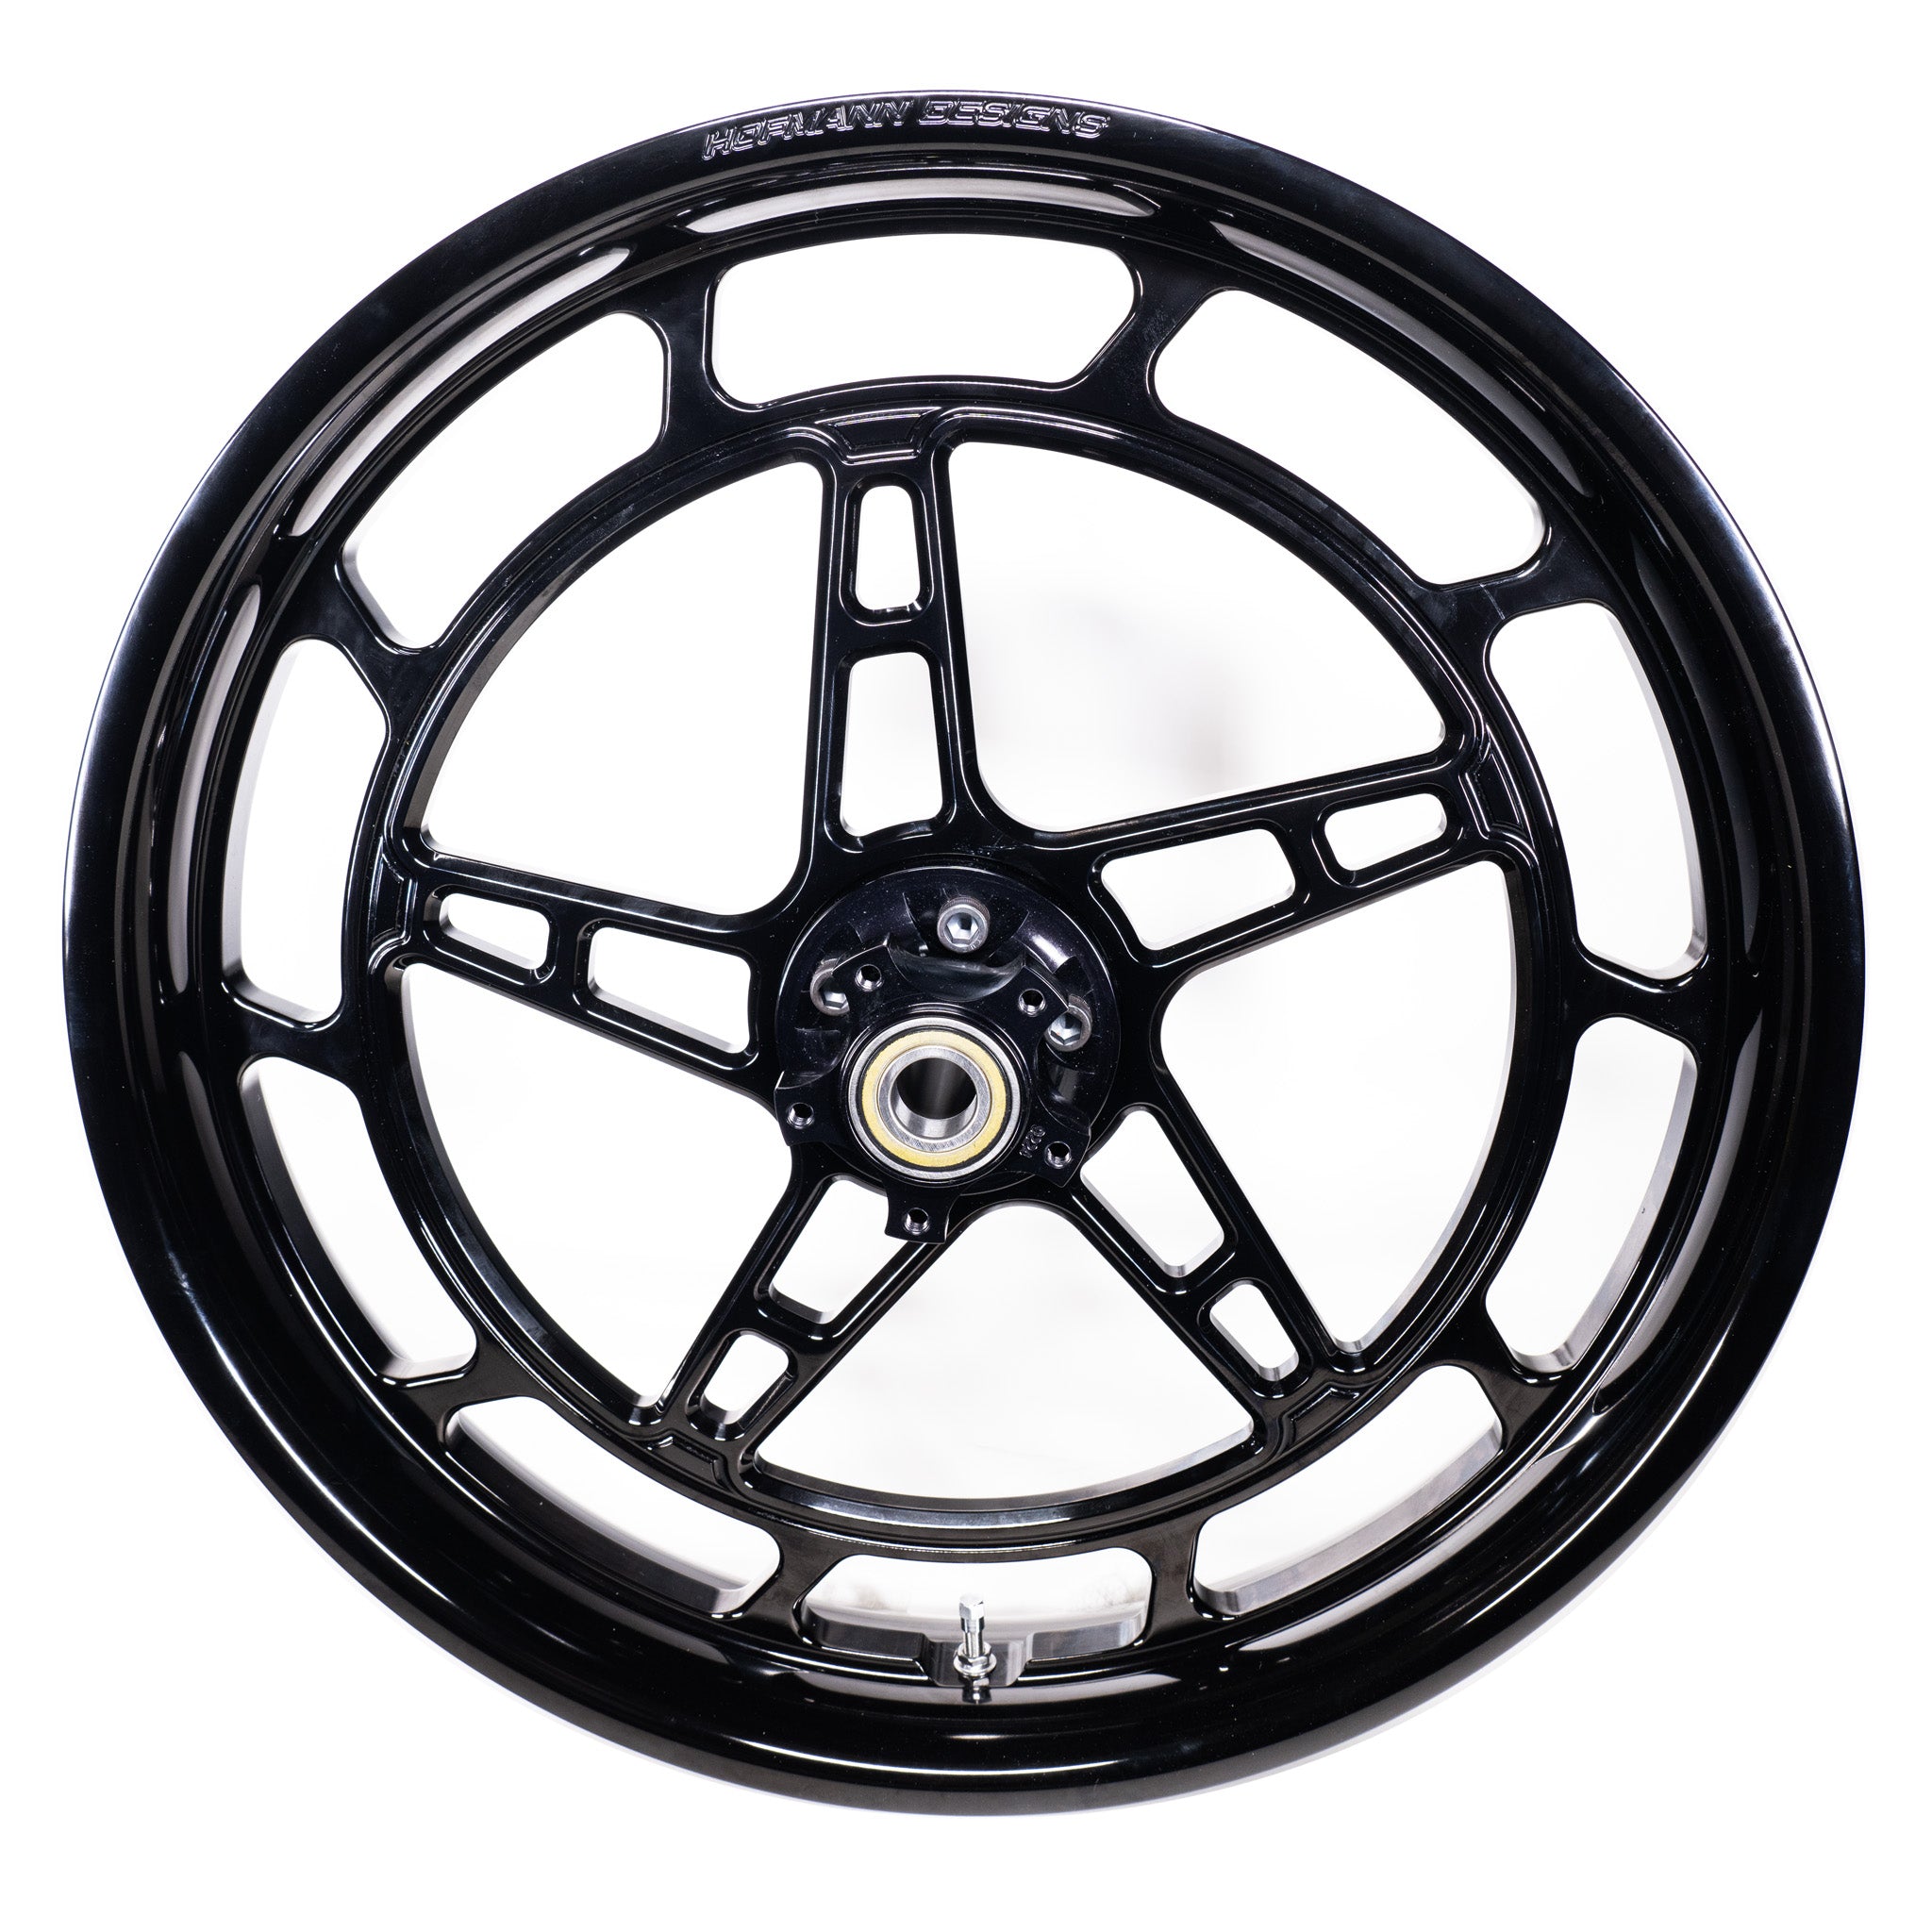 Black Directional 5 Star Front Wheel w Race Hub